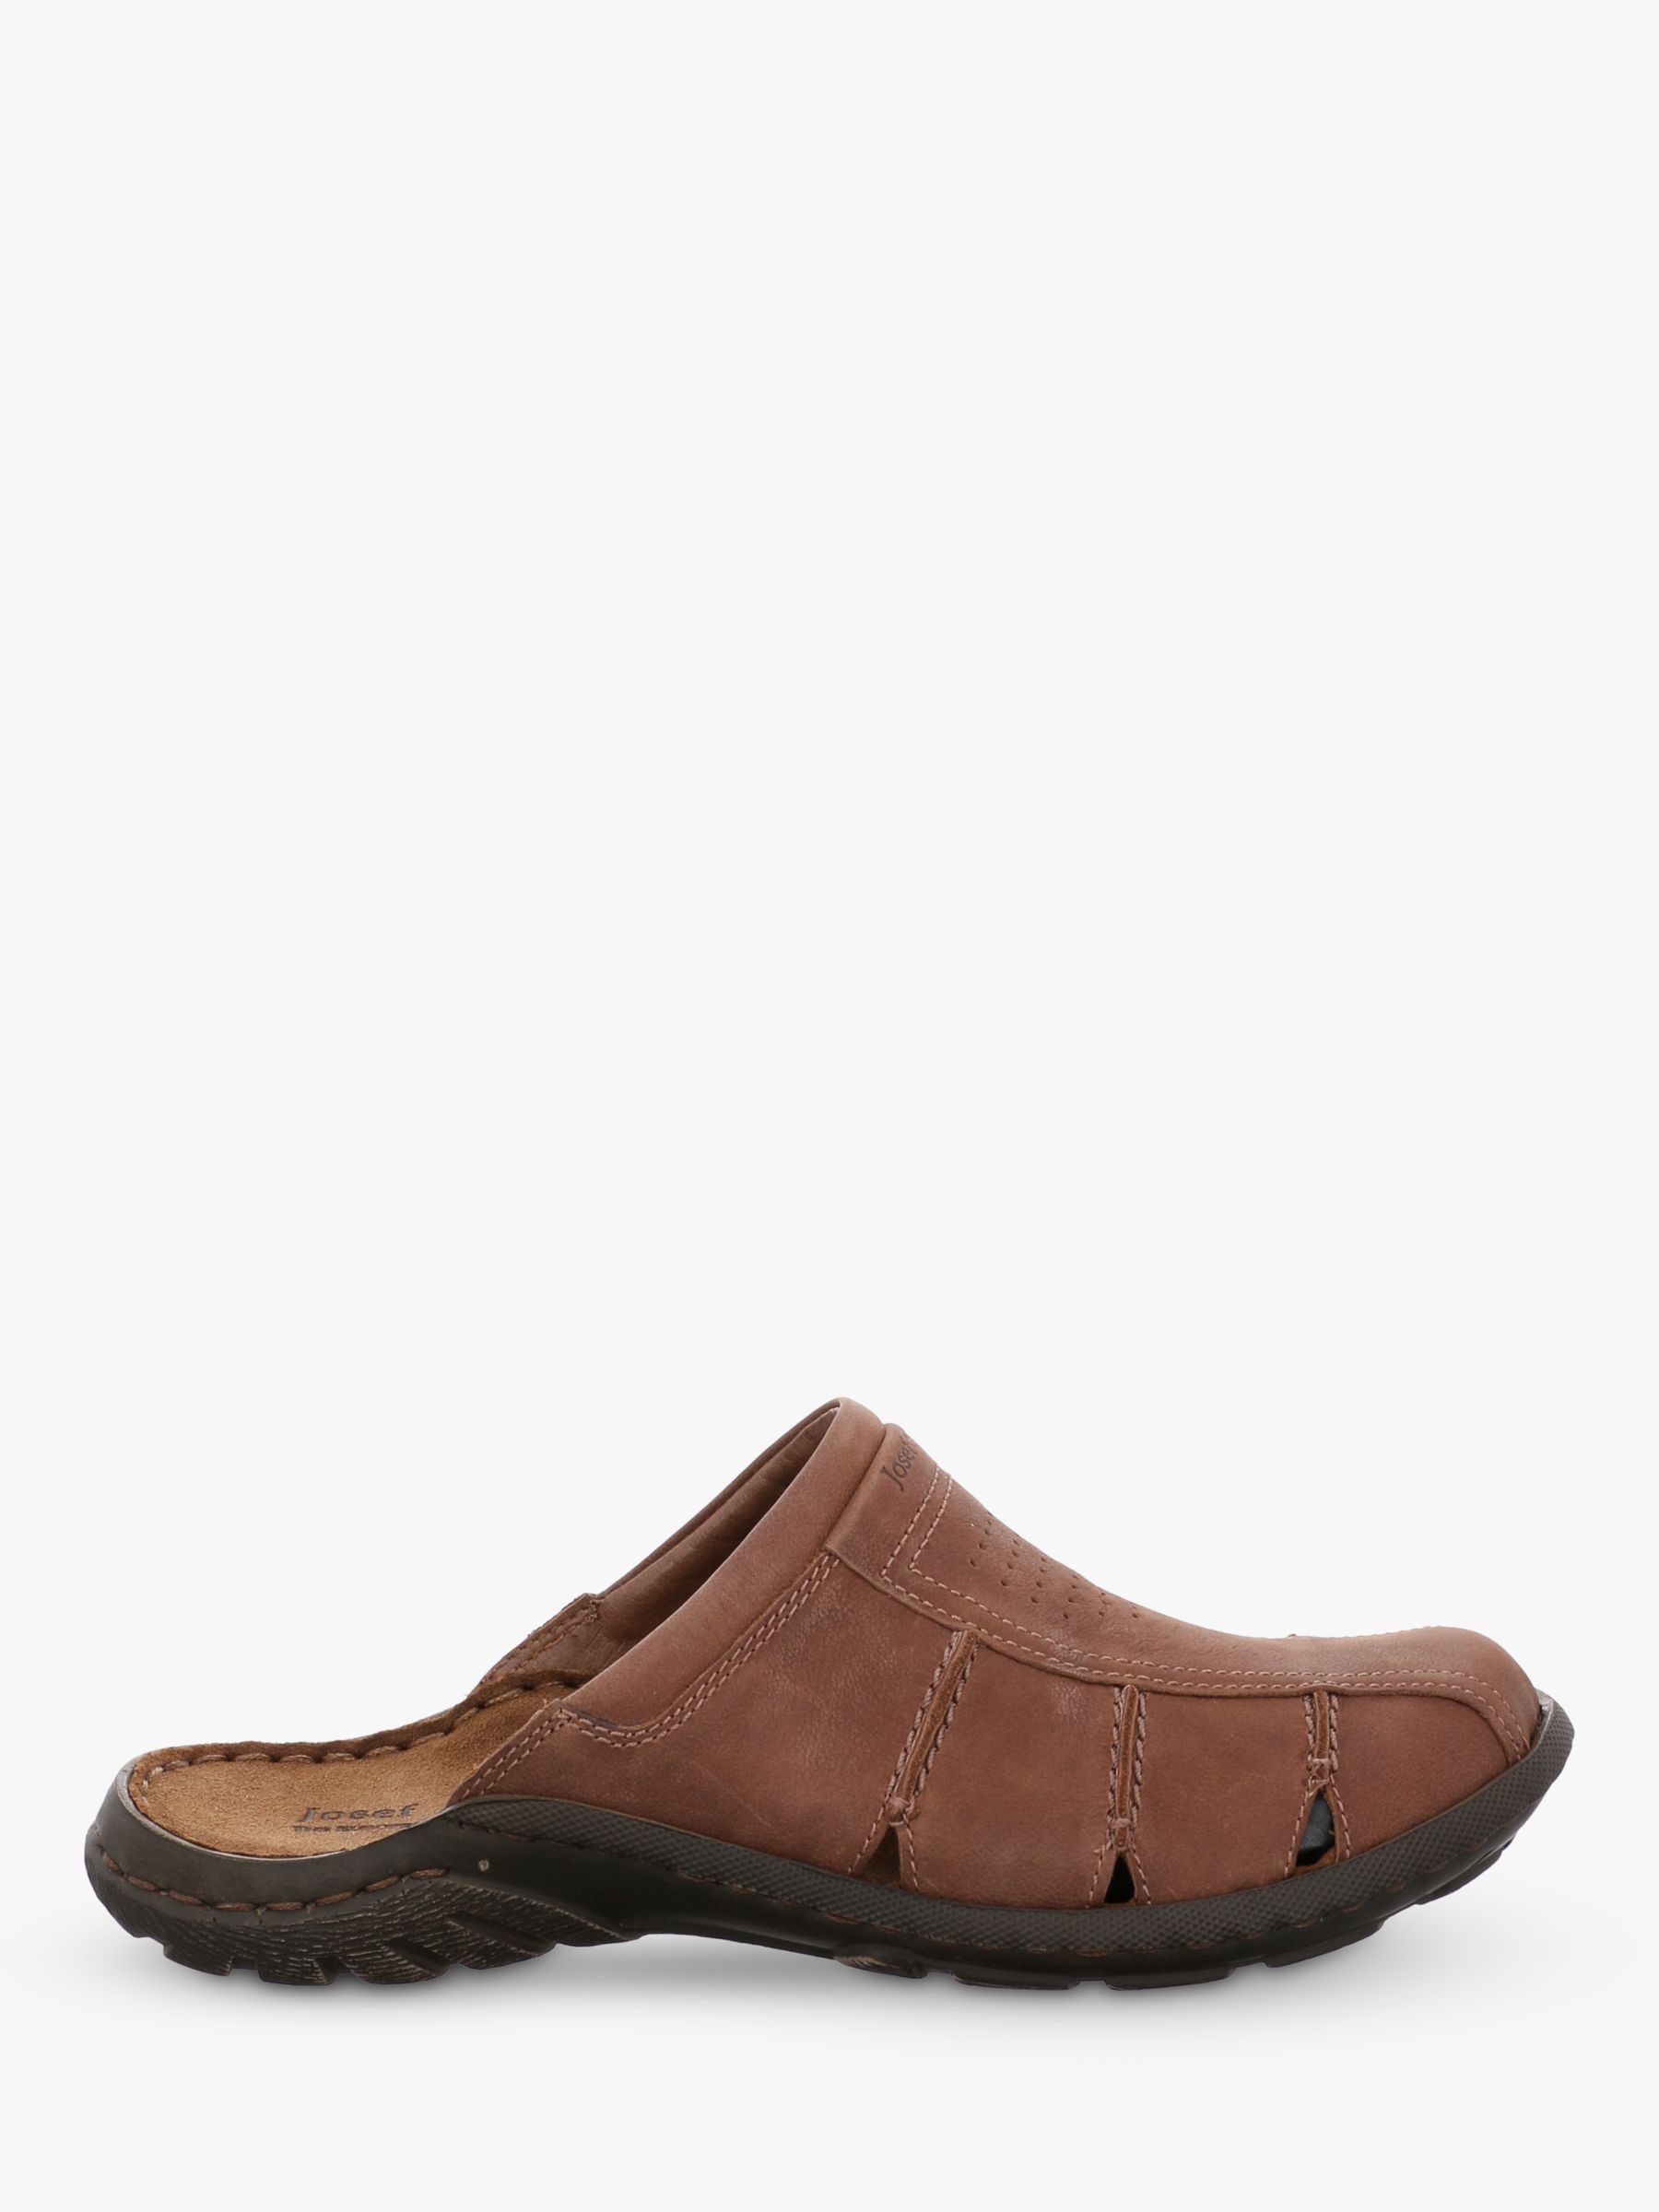 Josef Seibel Logan 22 Leather Sandals, Brown